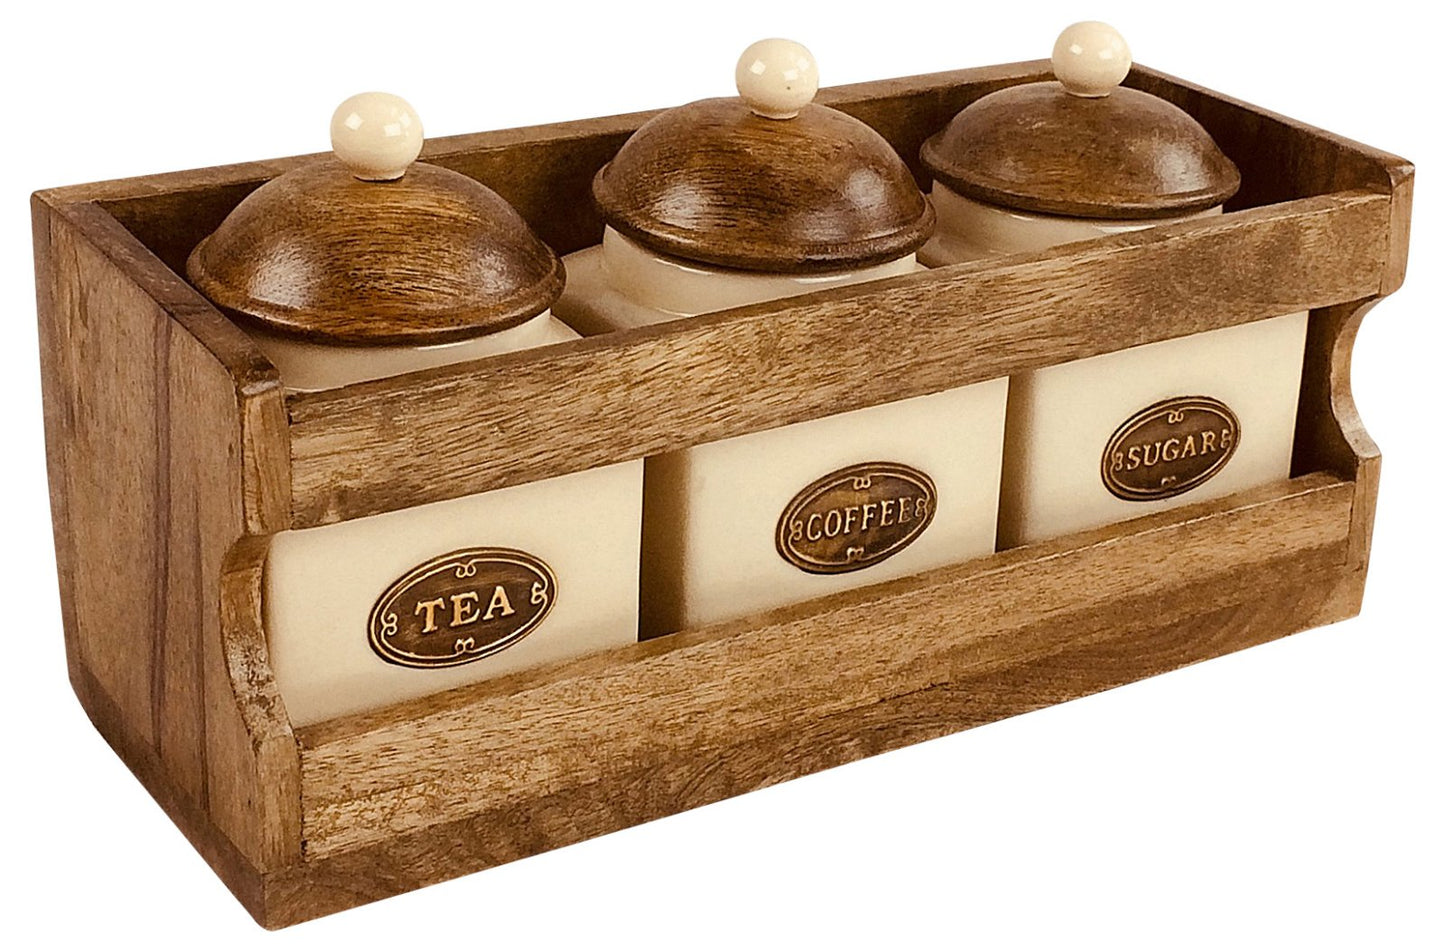 Wooden Rack with 3 Ceramic Jars